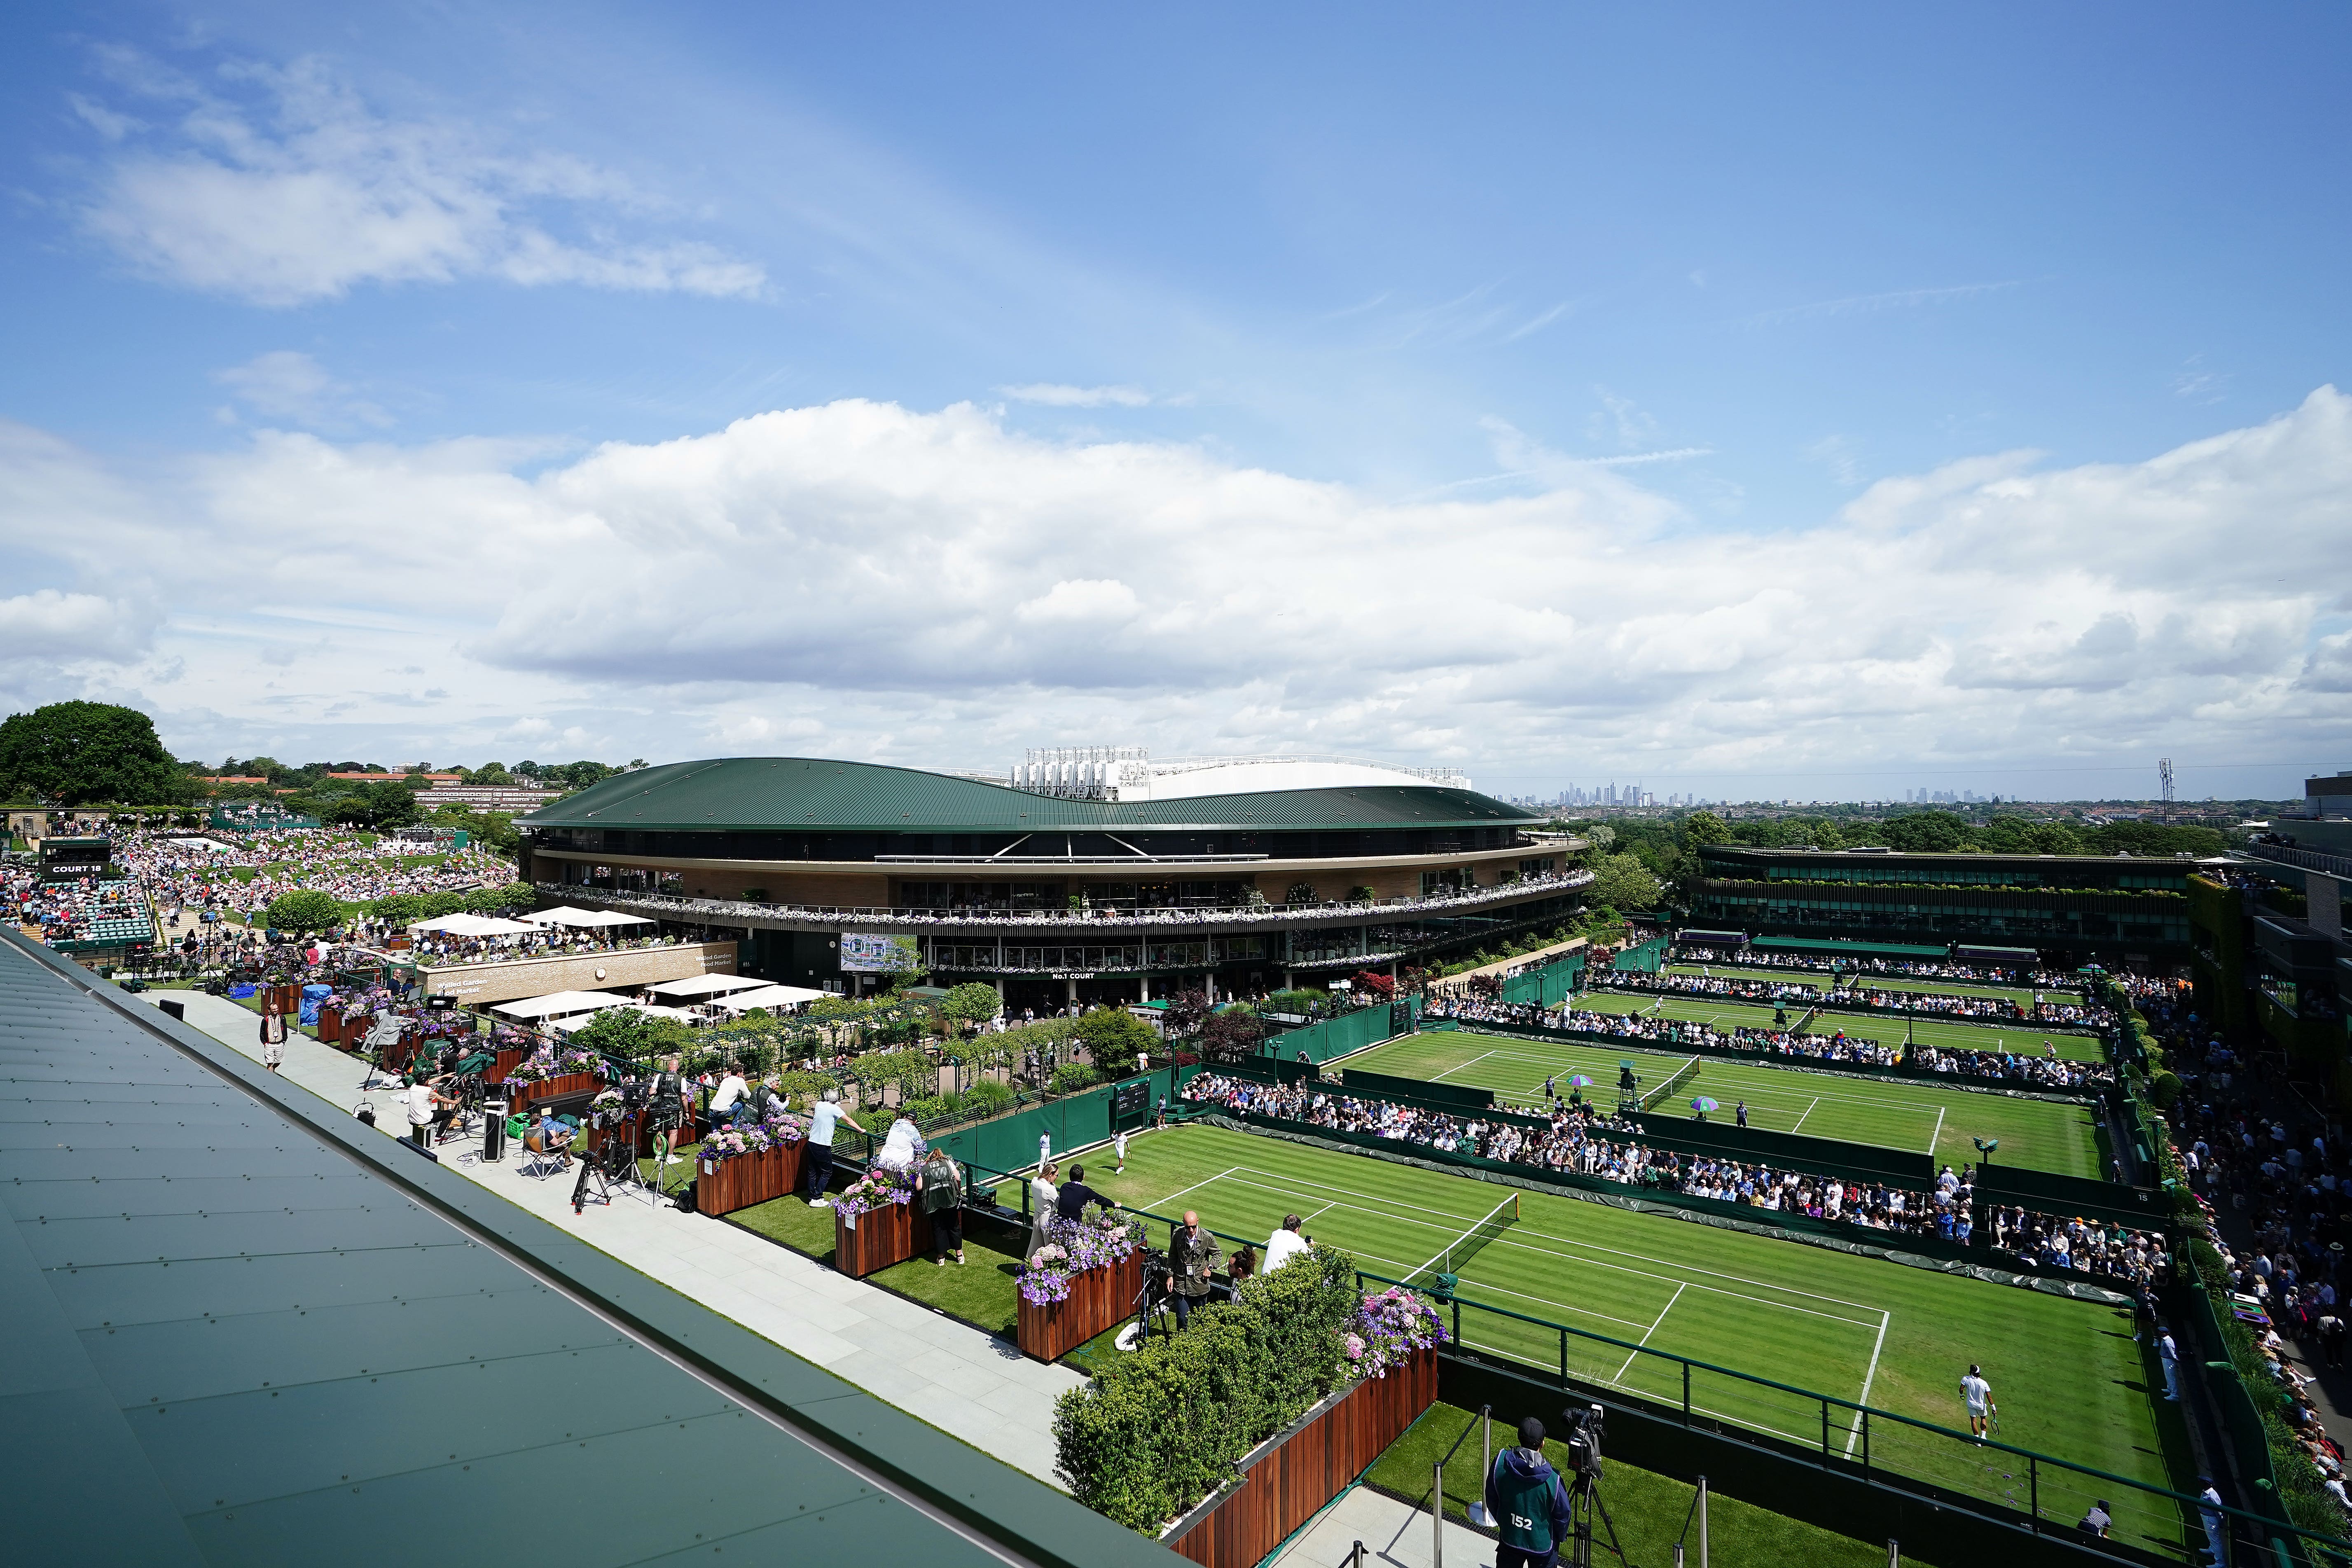 Wimbledon, Tennis Championships, All England Club, London Borough